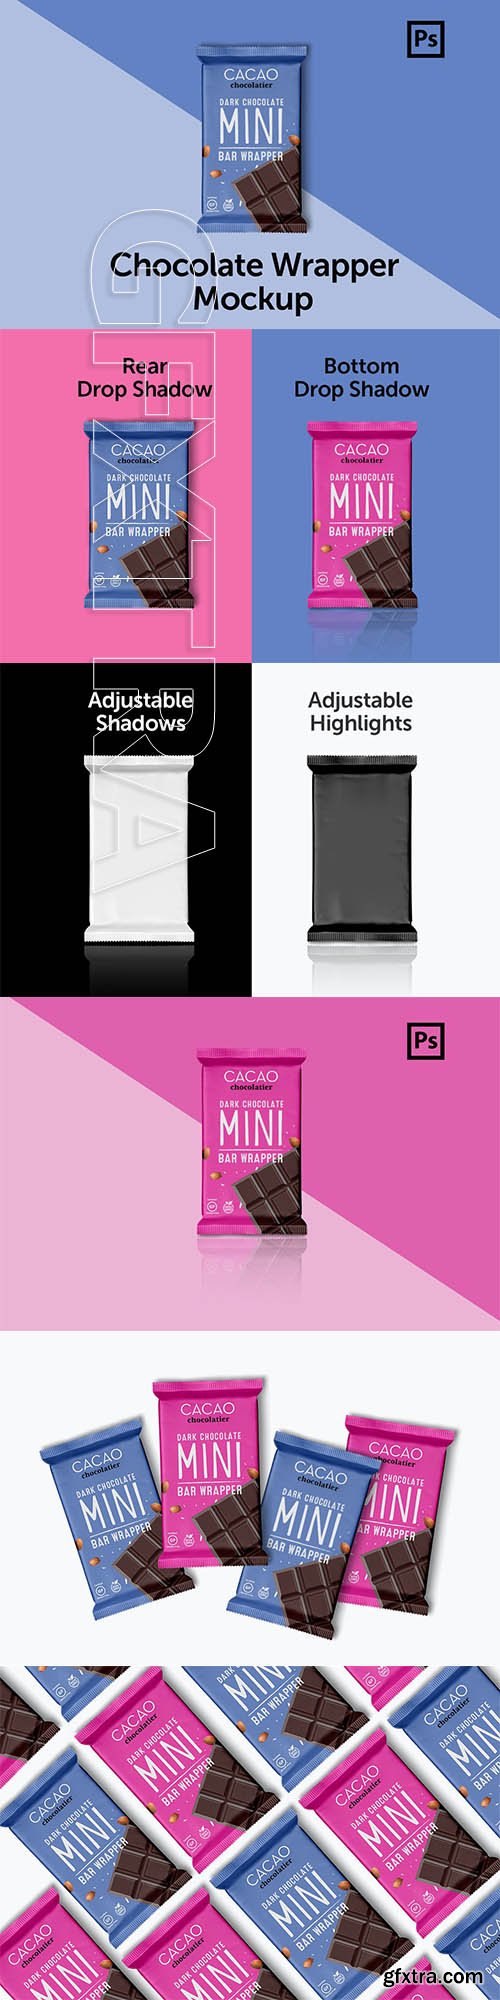 CreativeMarket - Mini Chocolate Wrapper Mockup 3653302